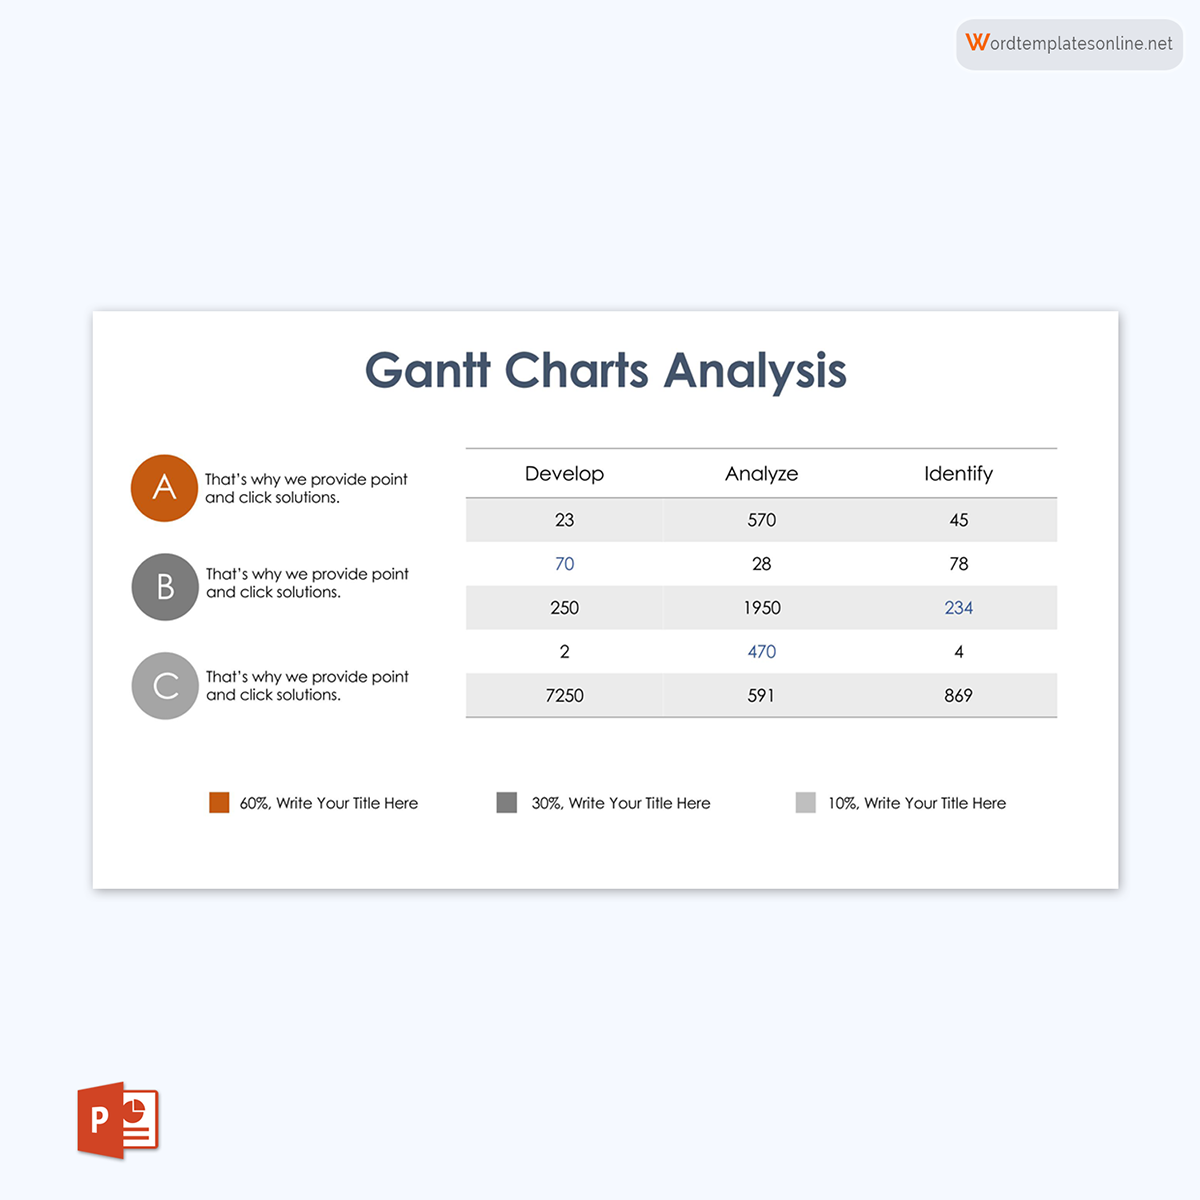 Professional Editable Gantt Chart Analysis Template 06 as PowerPoint Slides